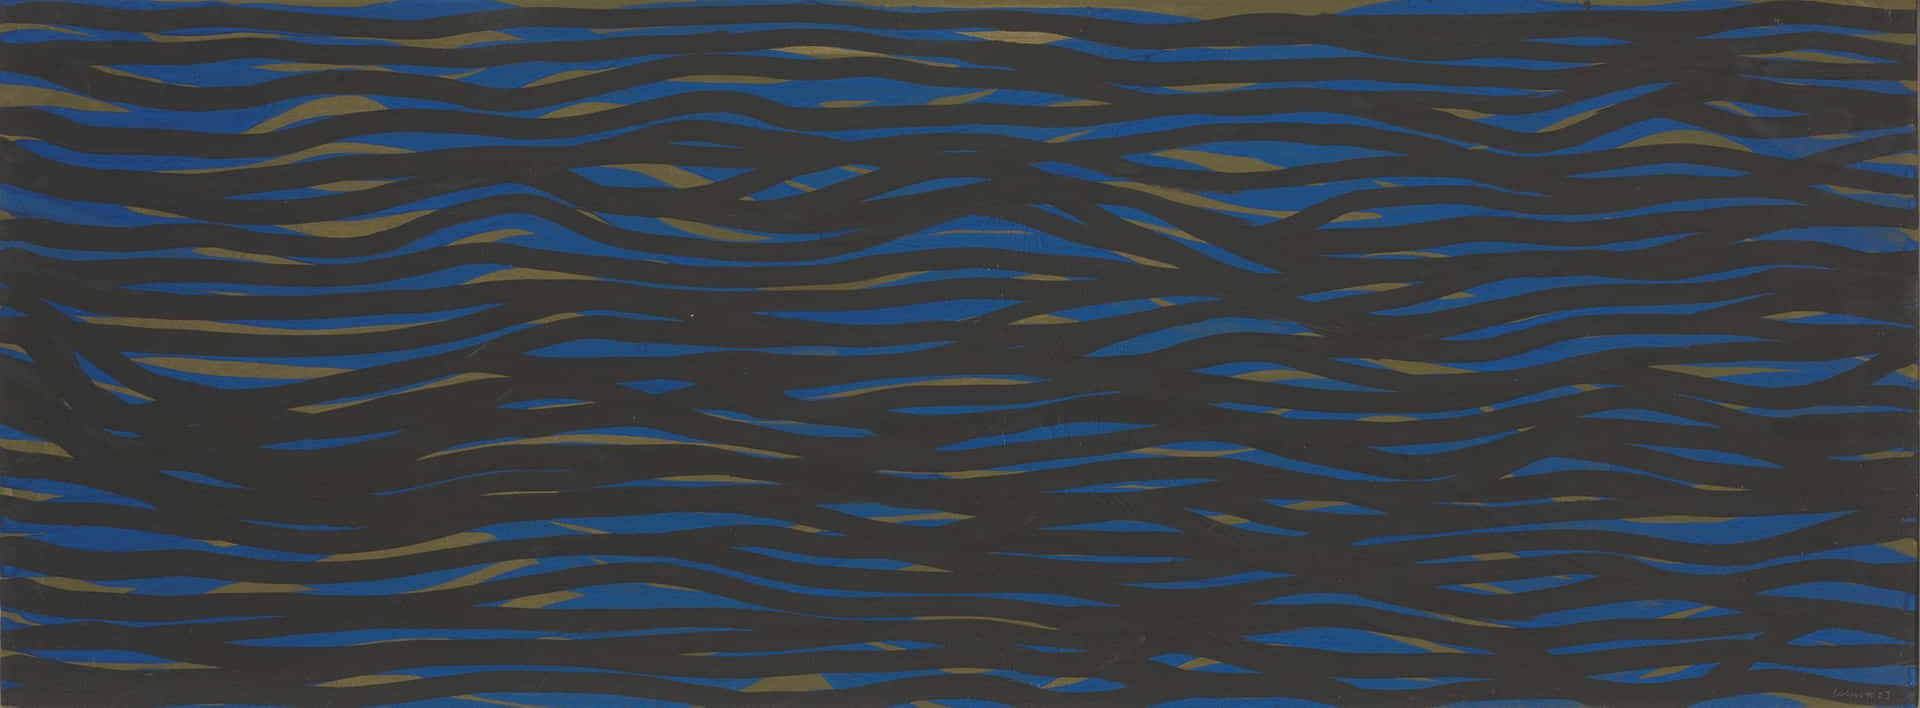 Imagende Líneas Onduladas Horizontales Abstractas En Color Gris.